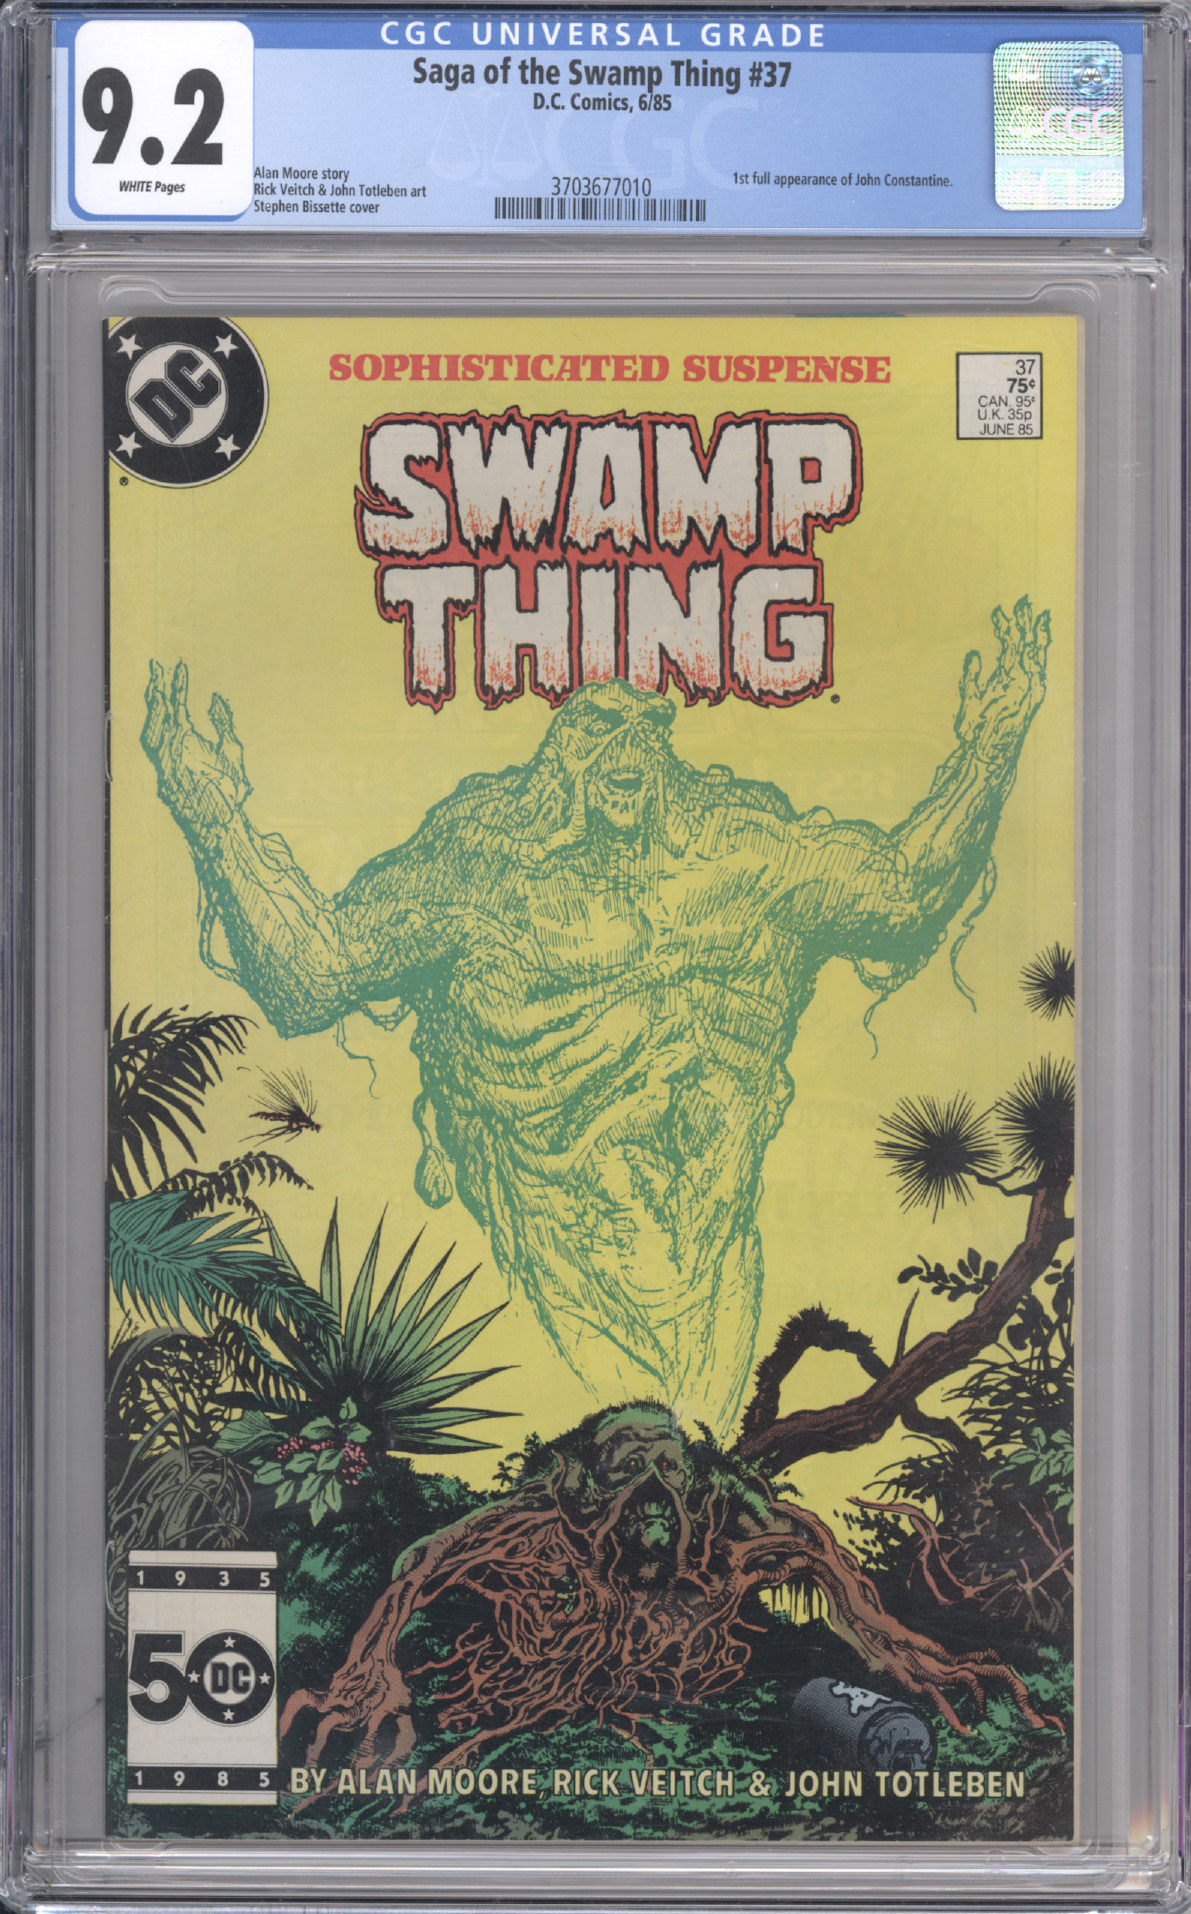 Saga of the Swamp Thing #37 front